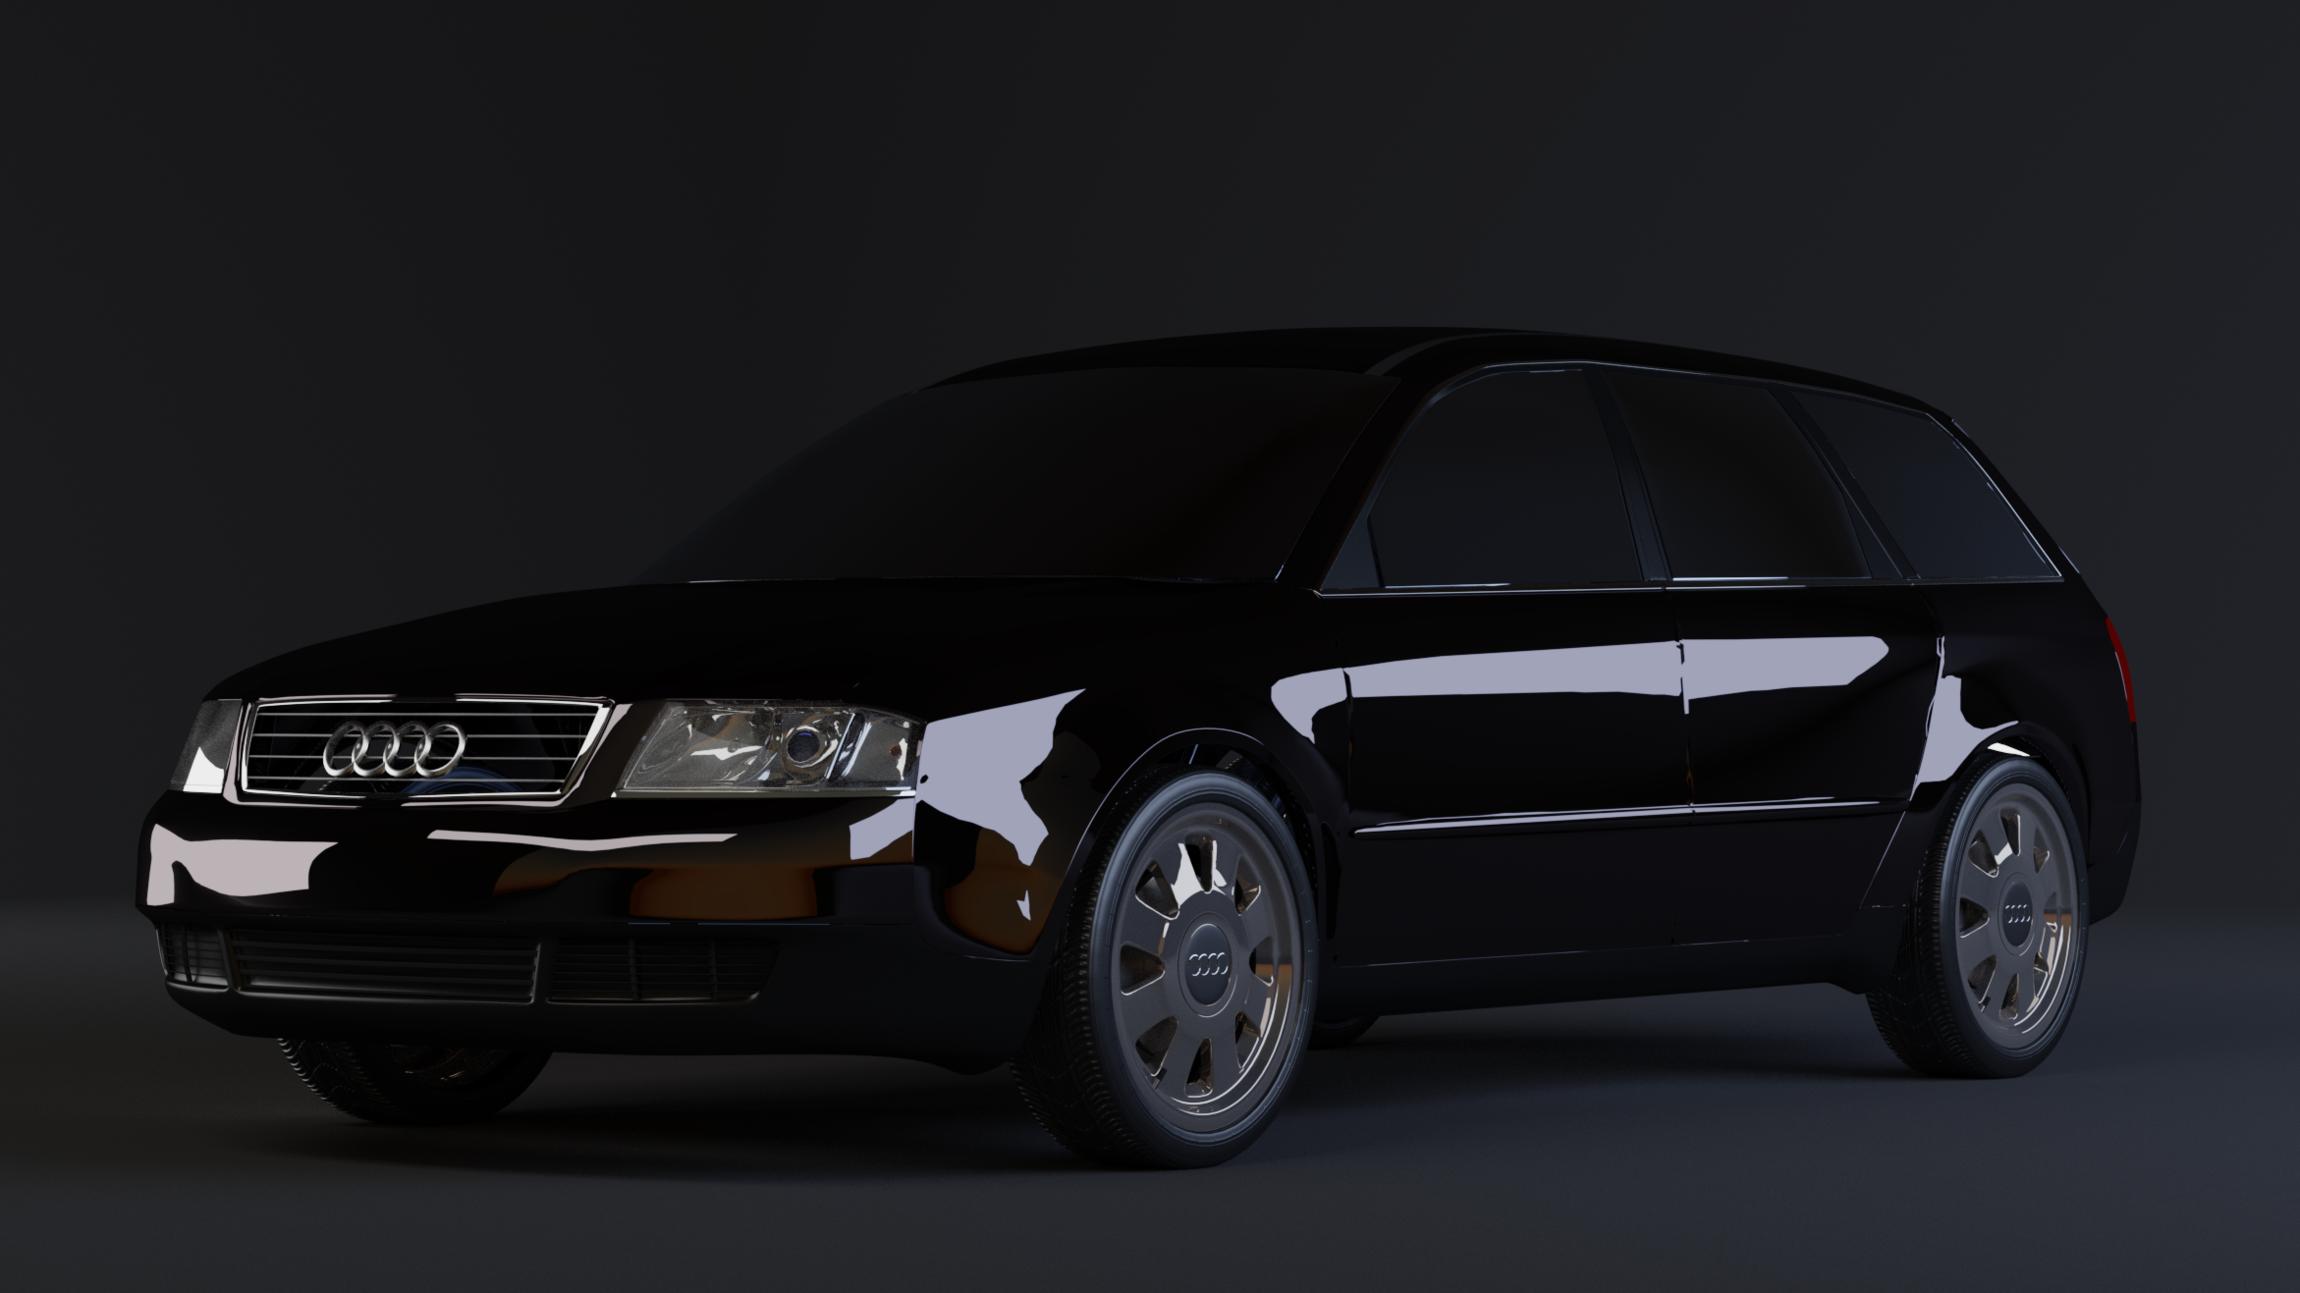 Audi A6 C5 Avant My First Proper Model Works In Progress Blender Artists Community